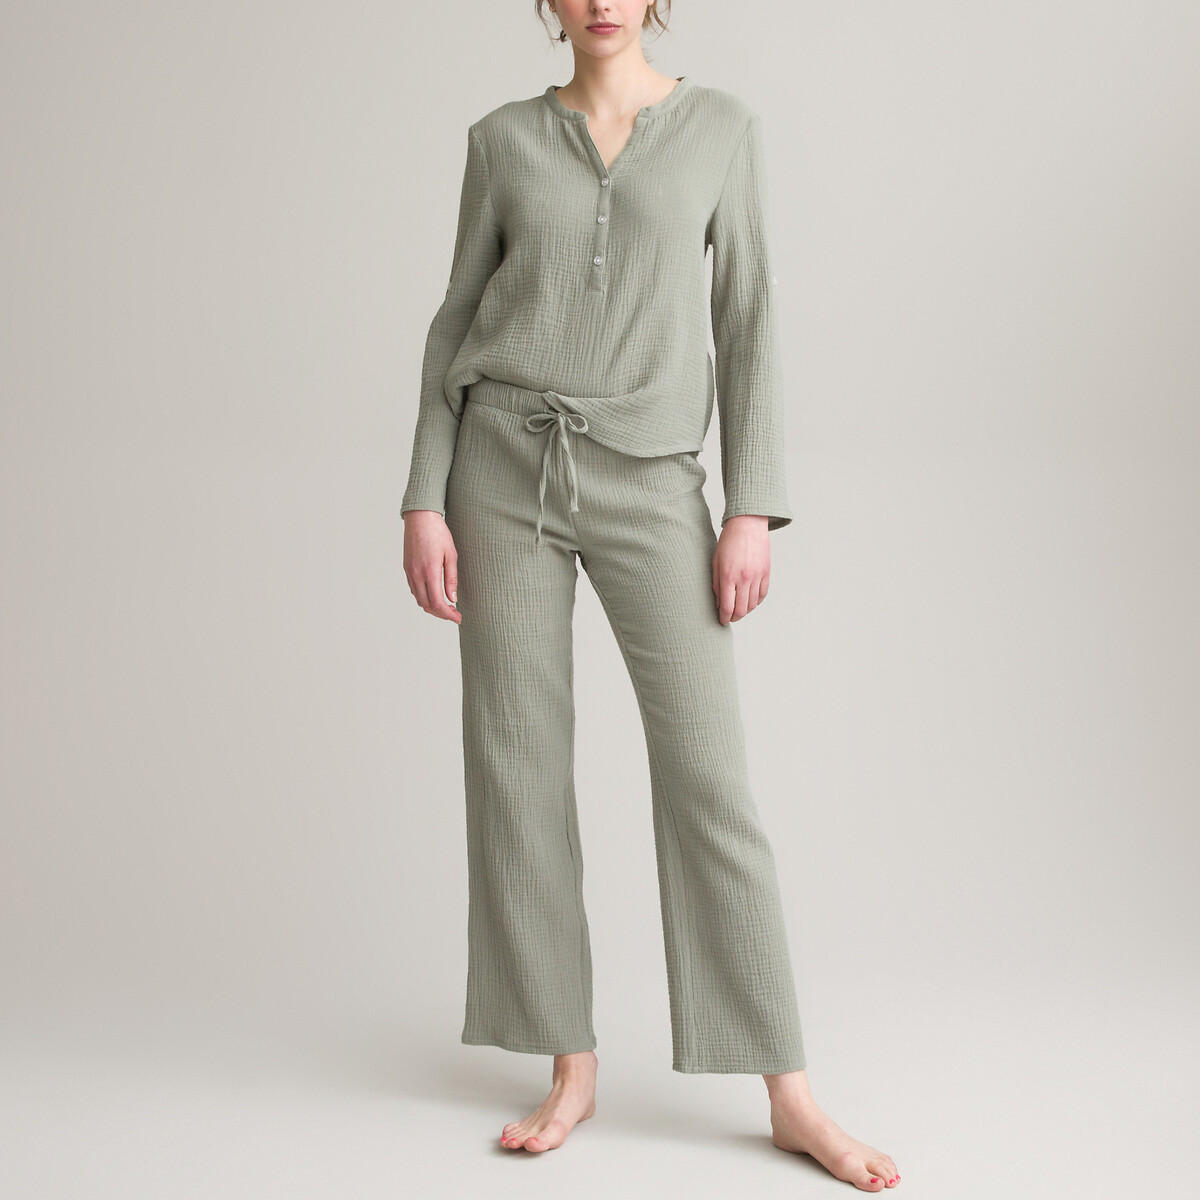 Pyjama Schlafanzug Onesie Overall Oysho M 38 Mode Homewear Onesies 